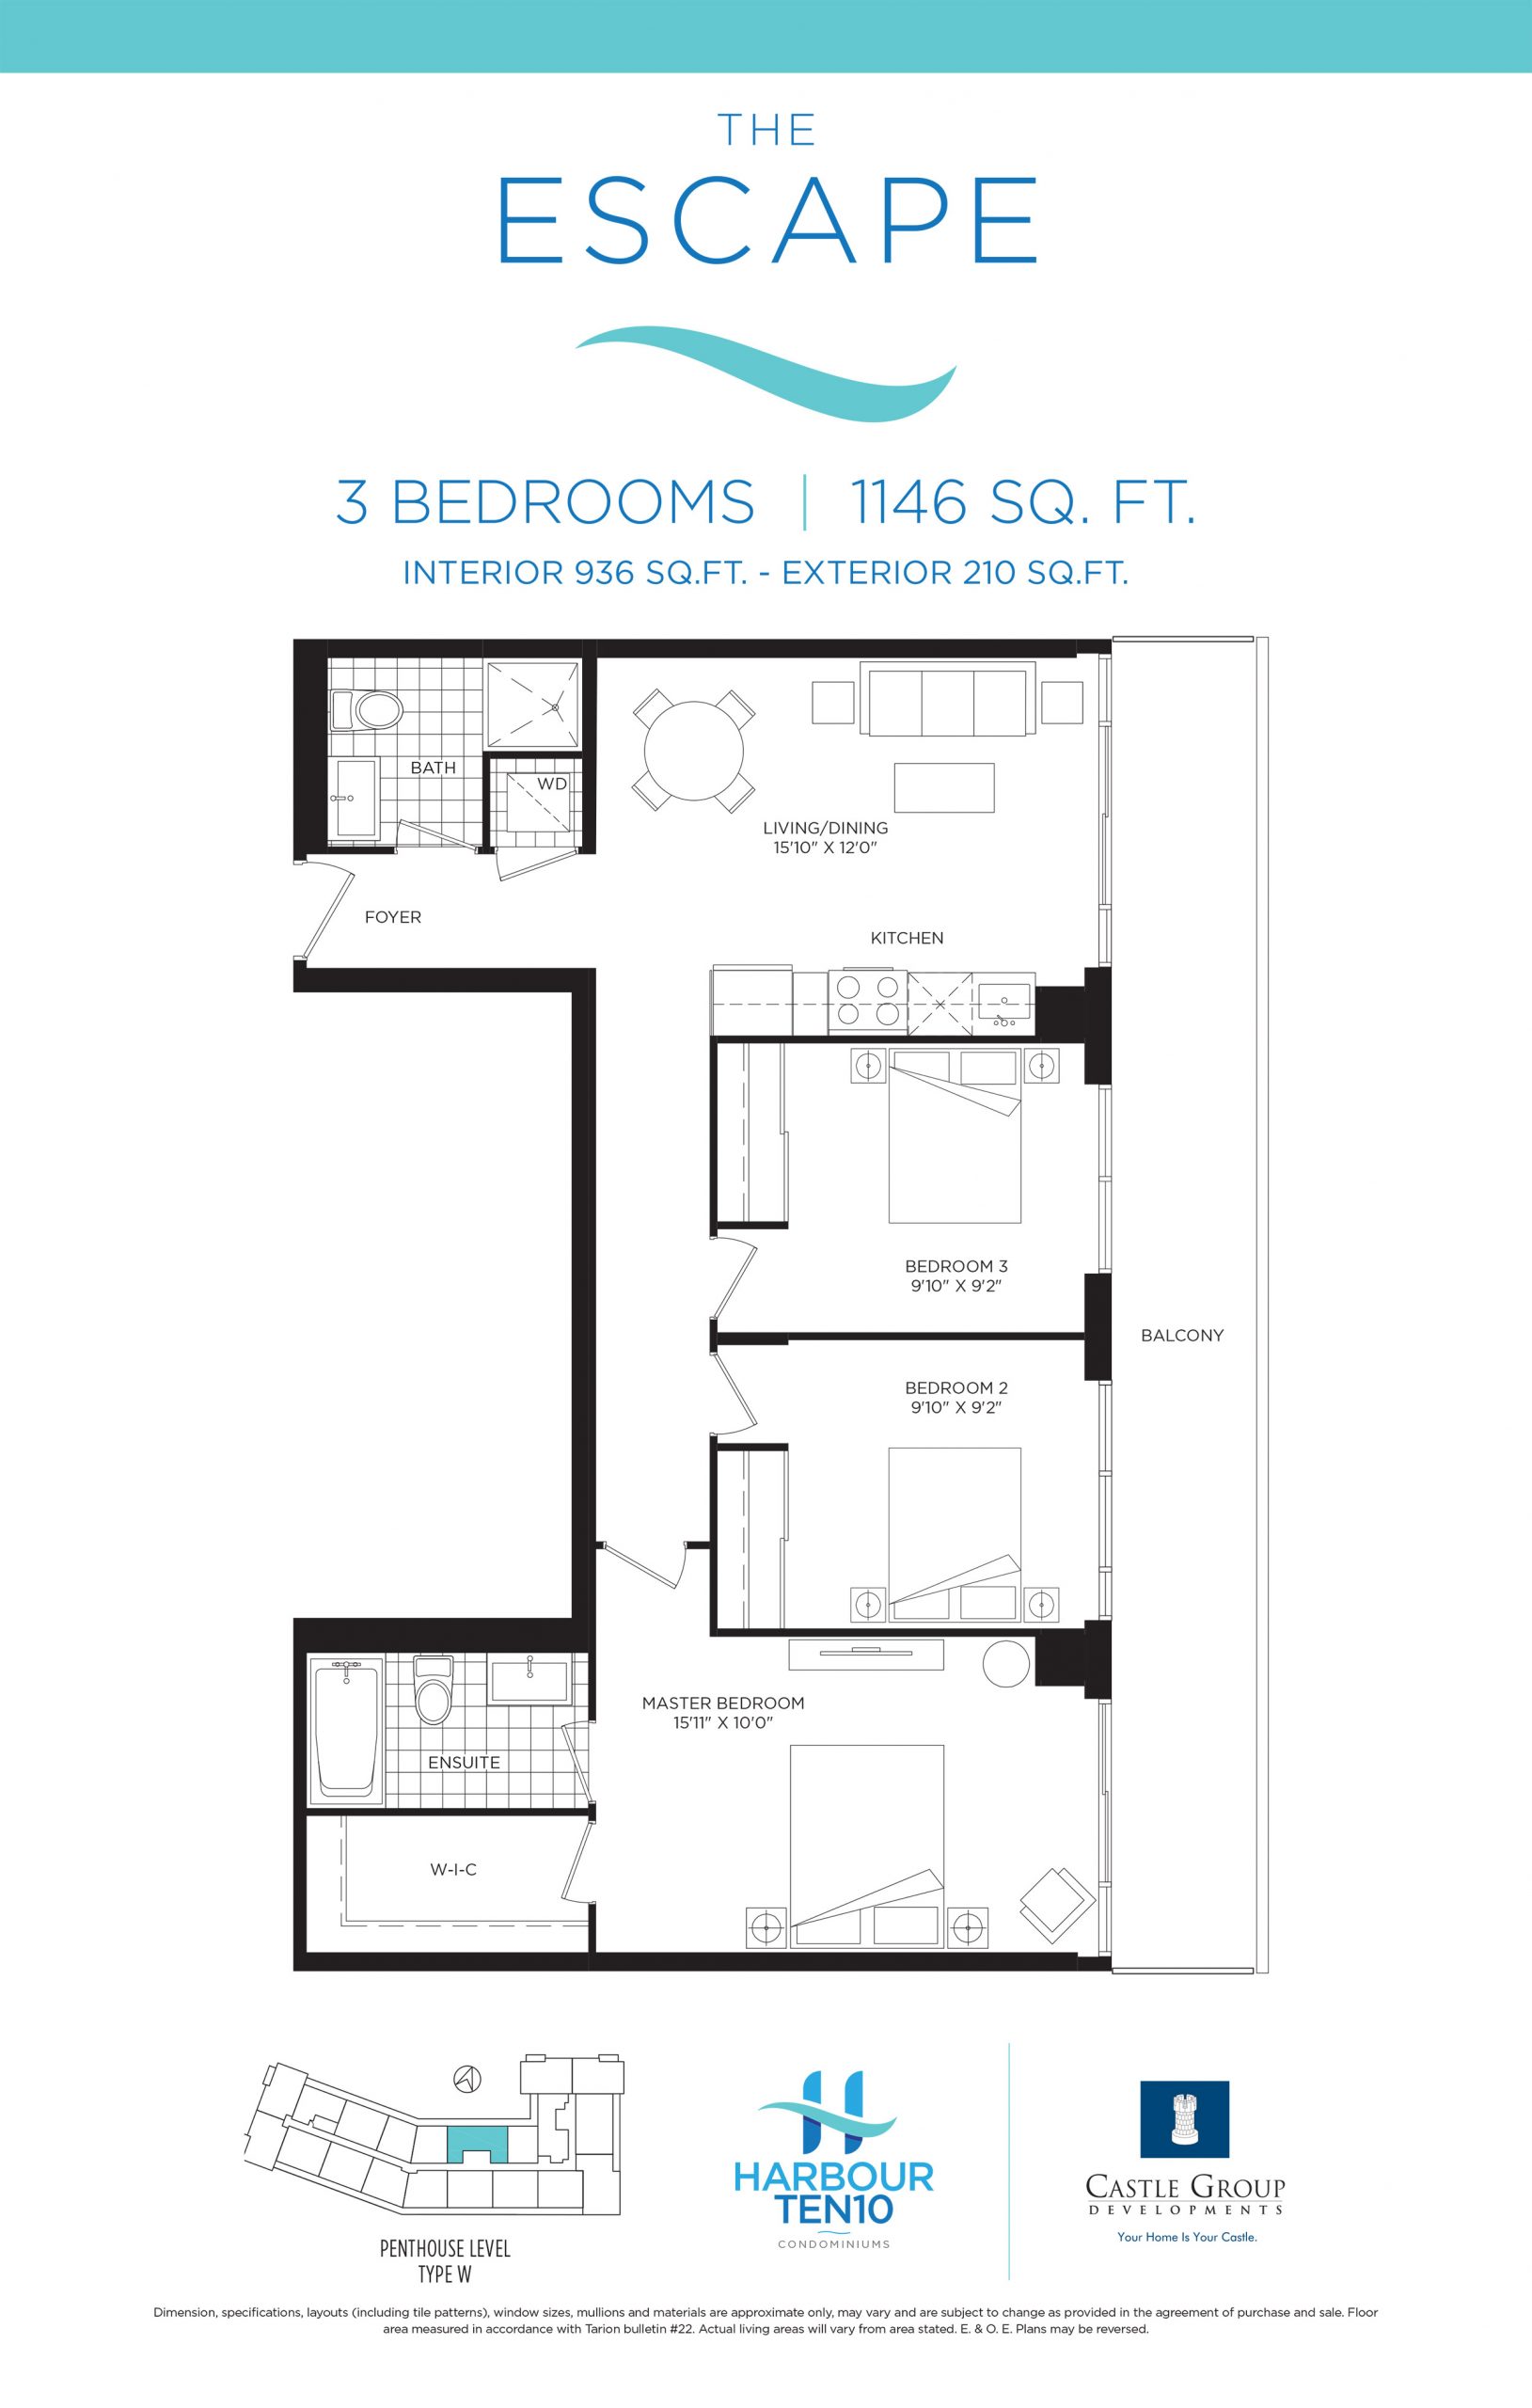 The Escape - 3 Bedroom Floor Plan of Harbour Ten10 Condos with undefined beds